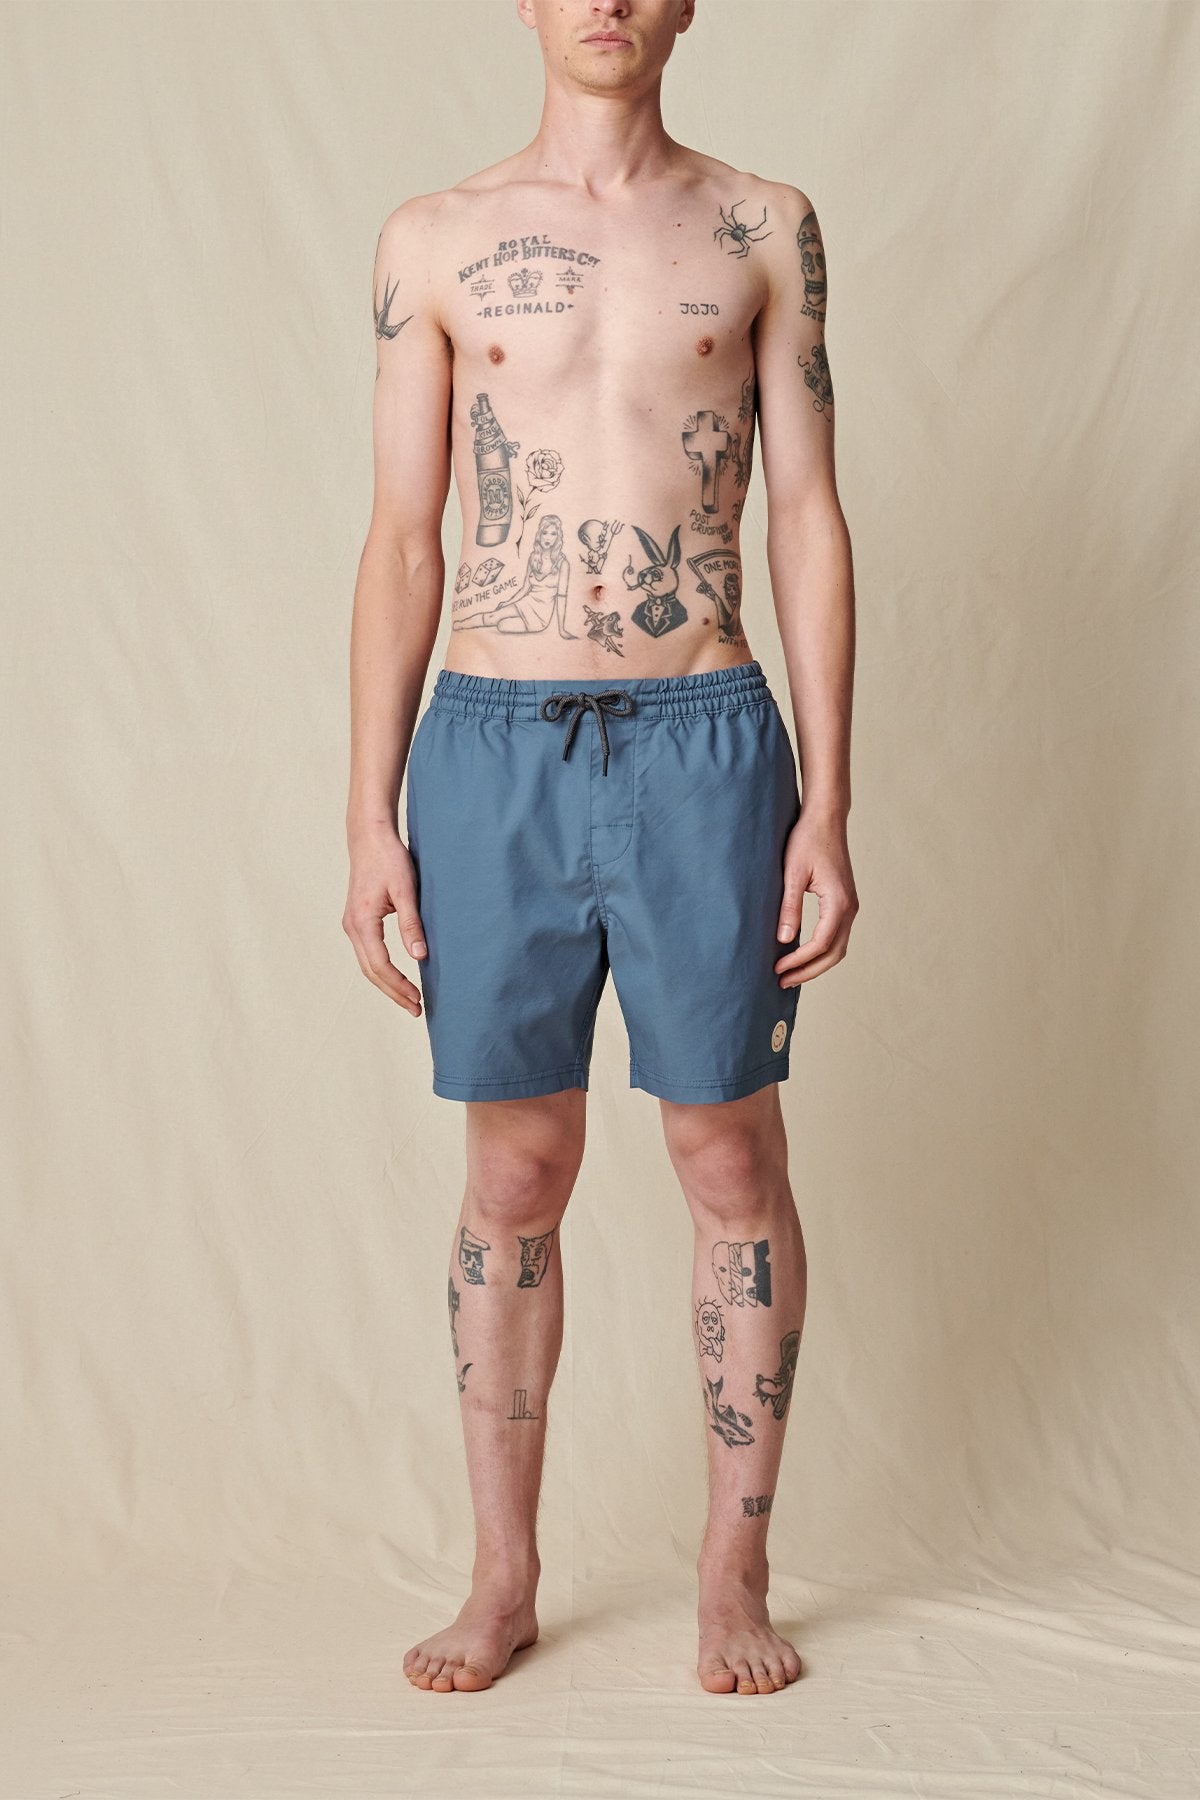 Globe Pantalones cortos - Clean Swell Poolshort en color Slate Blue